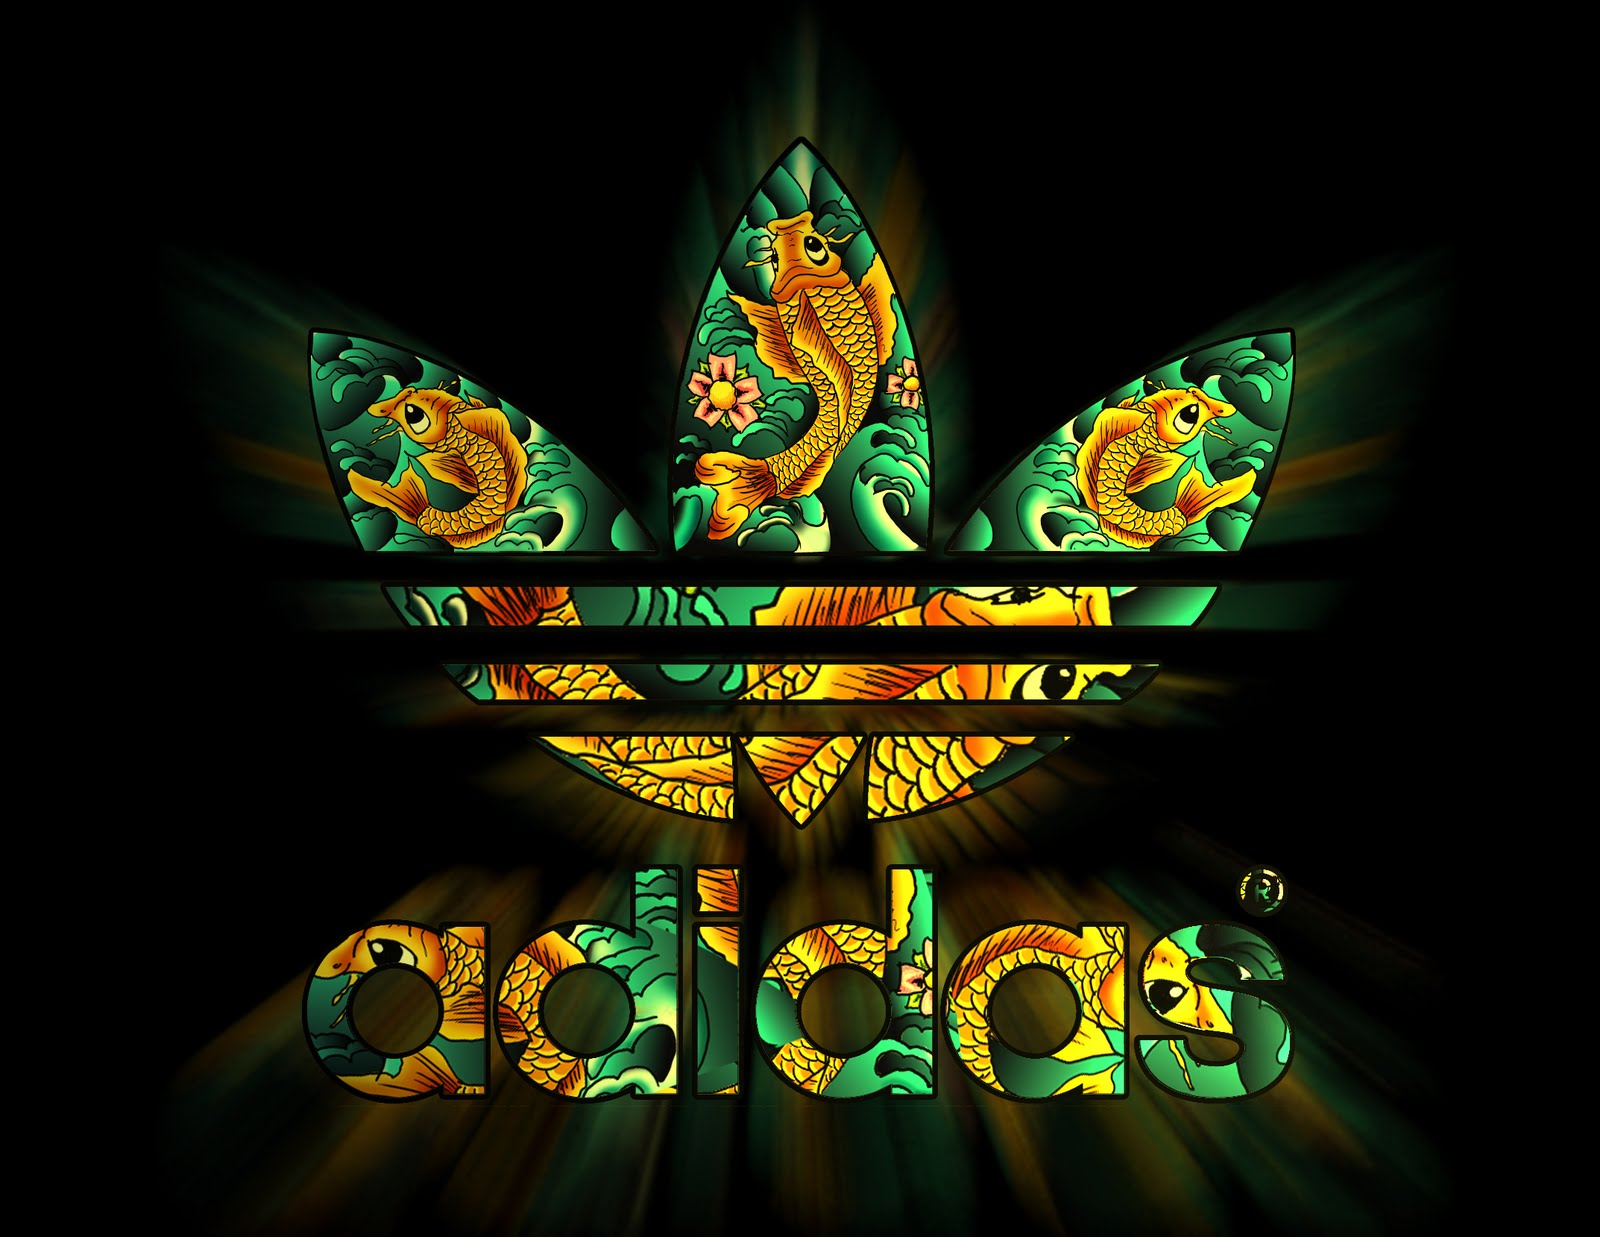 http://4.bp.blogspot.com/-c41tBmYZjAM/TcW4Q7rPPBI/AAAAAAAAACA/qAfP7XBXYUI/s1600/adidas_logo_with_koi_fish_2_by_Plecyfenga.jpg